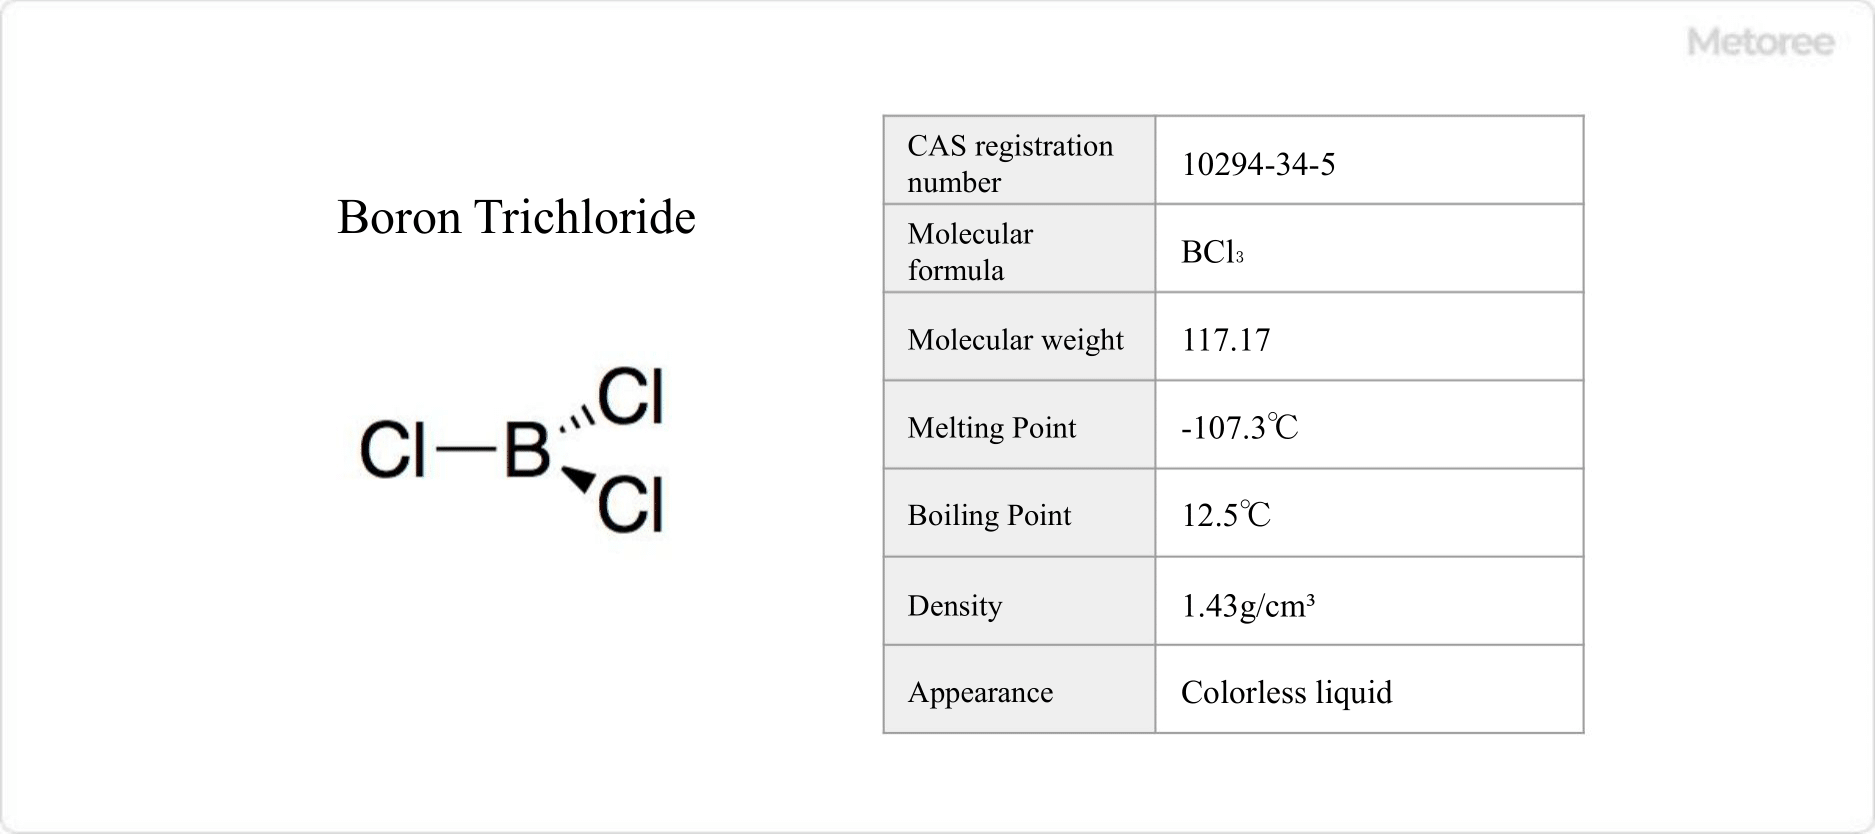 Figure 1. Basic Information on Boron Trichloride